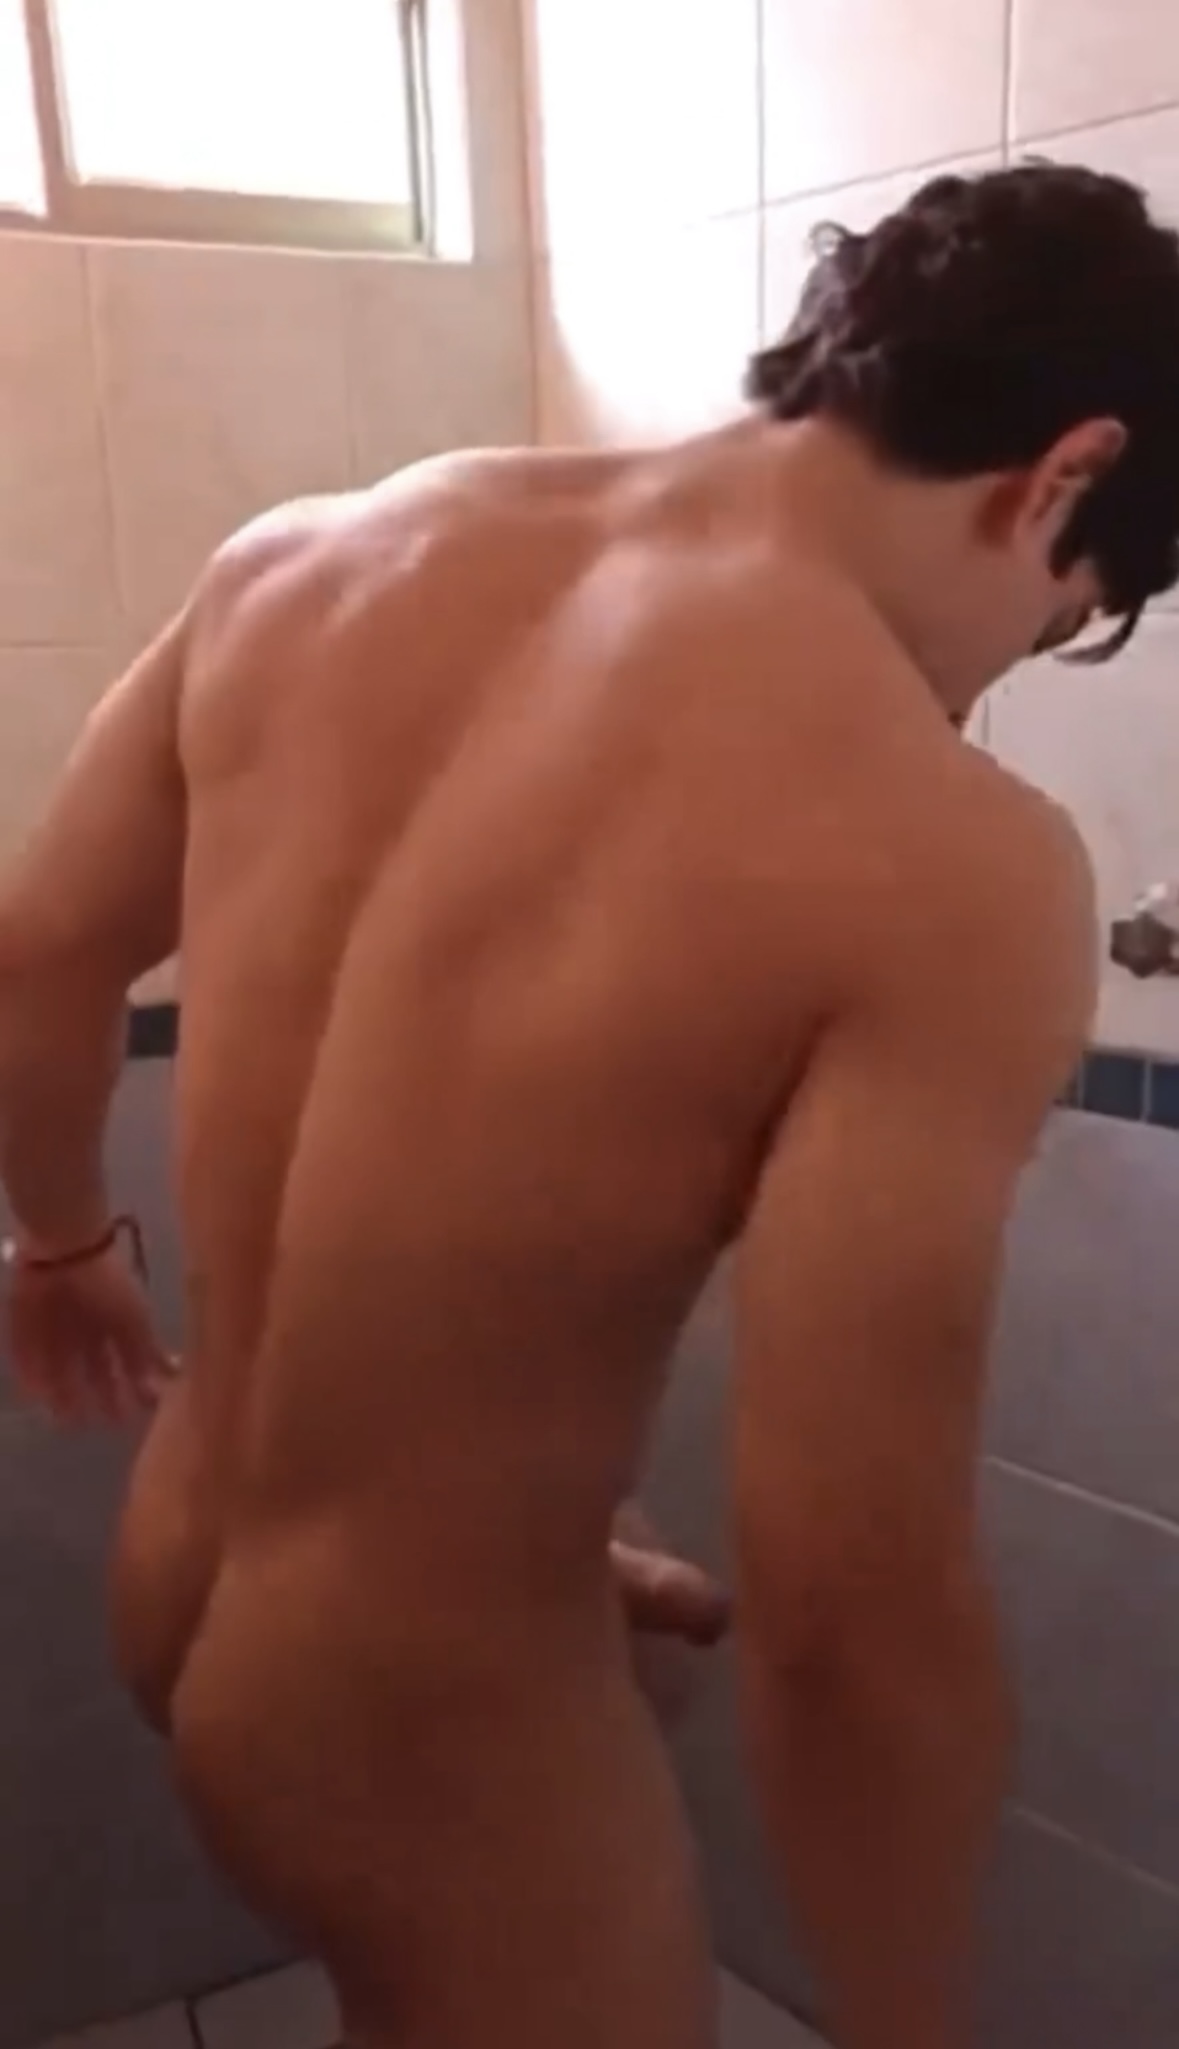 Latin boy in shower 4